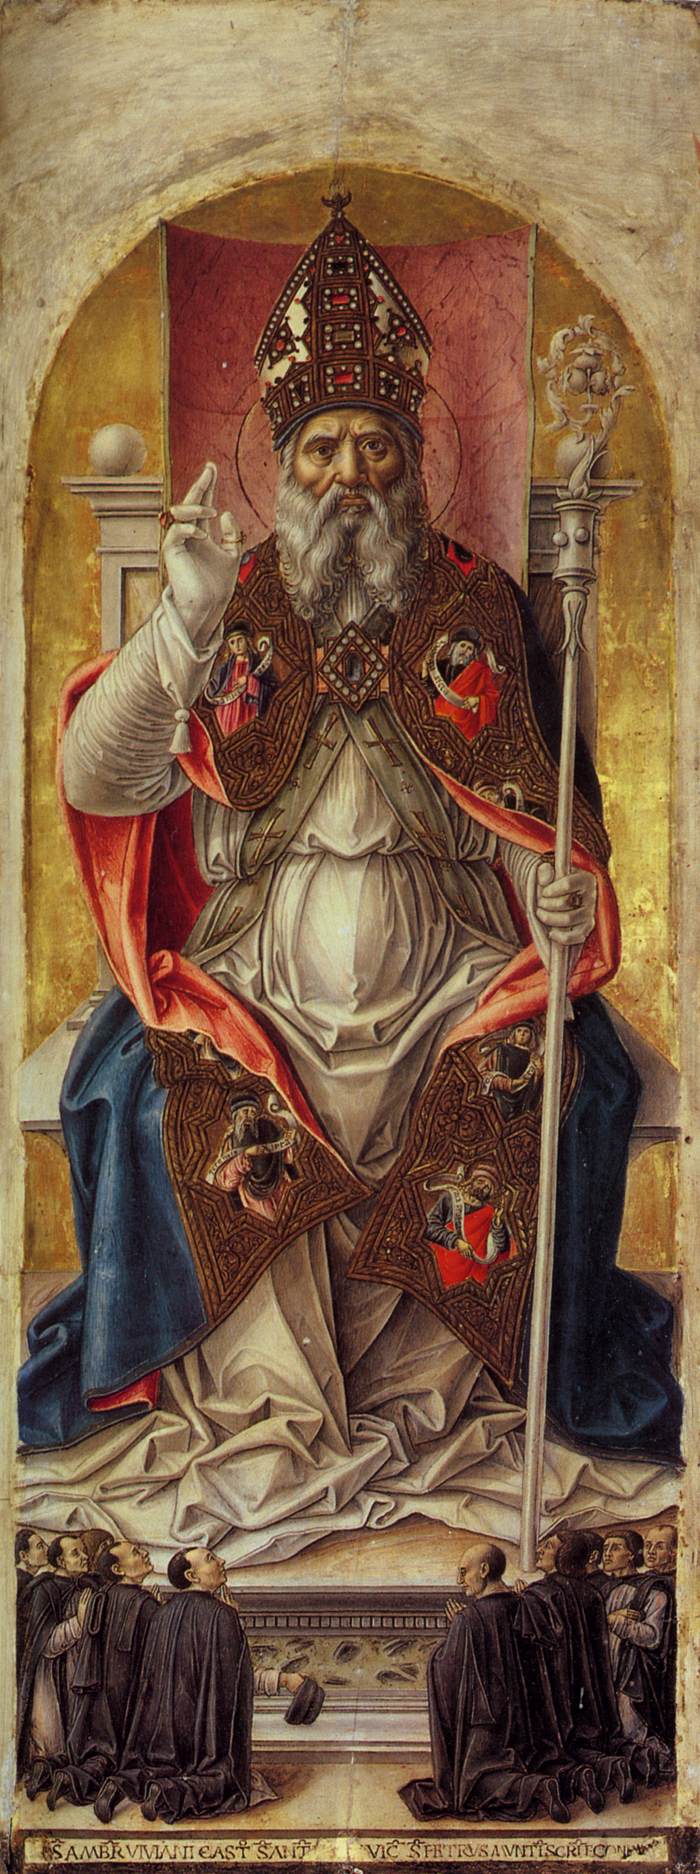 Saint Ambrose Polyptych (central panel)